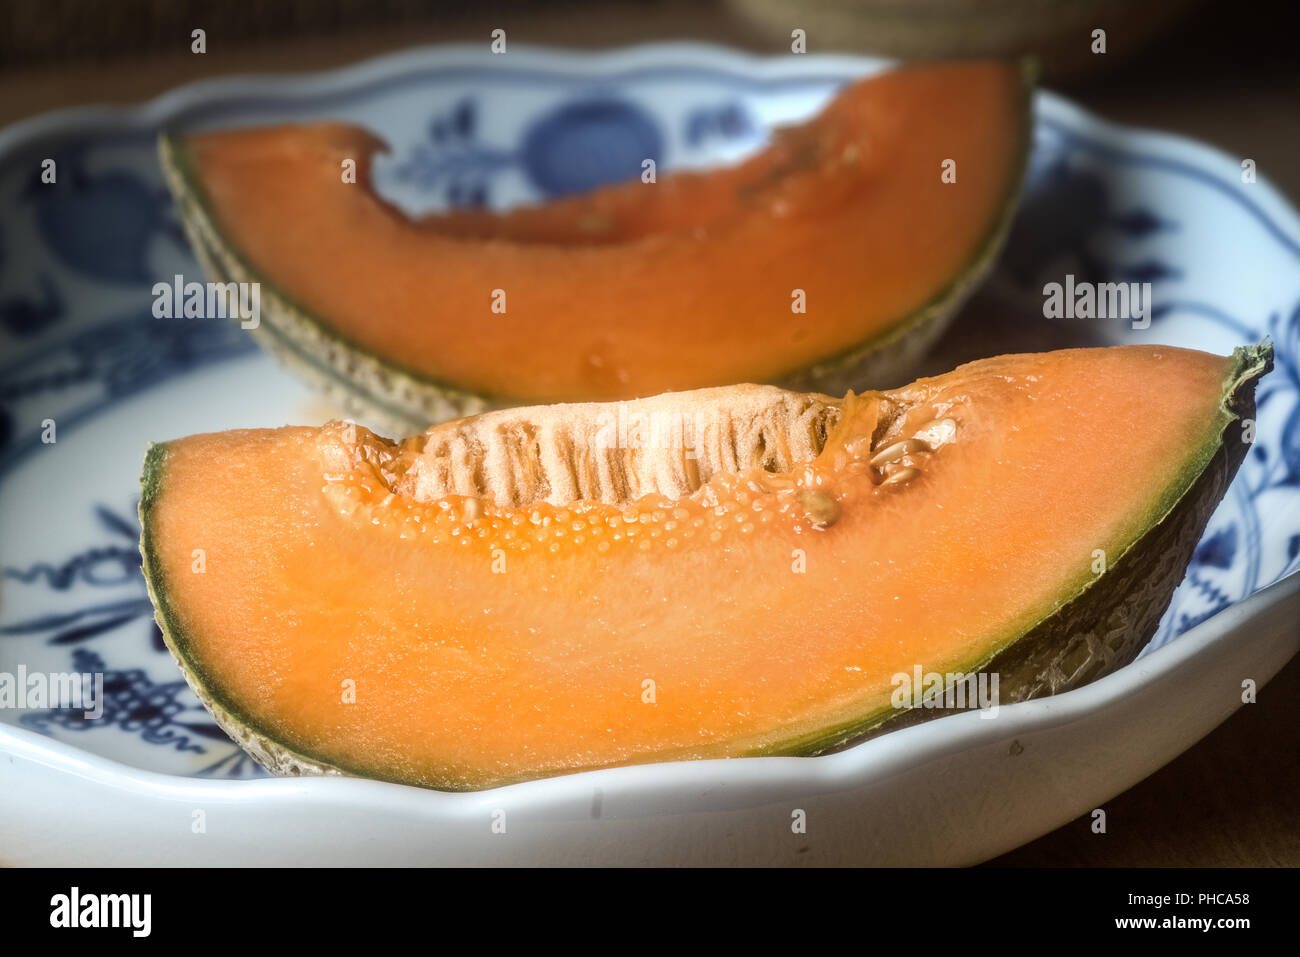 Sliced Cantaloupe melon tn a bowl (Meissen china. onion pattern) Stock Photo